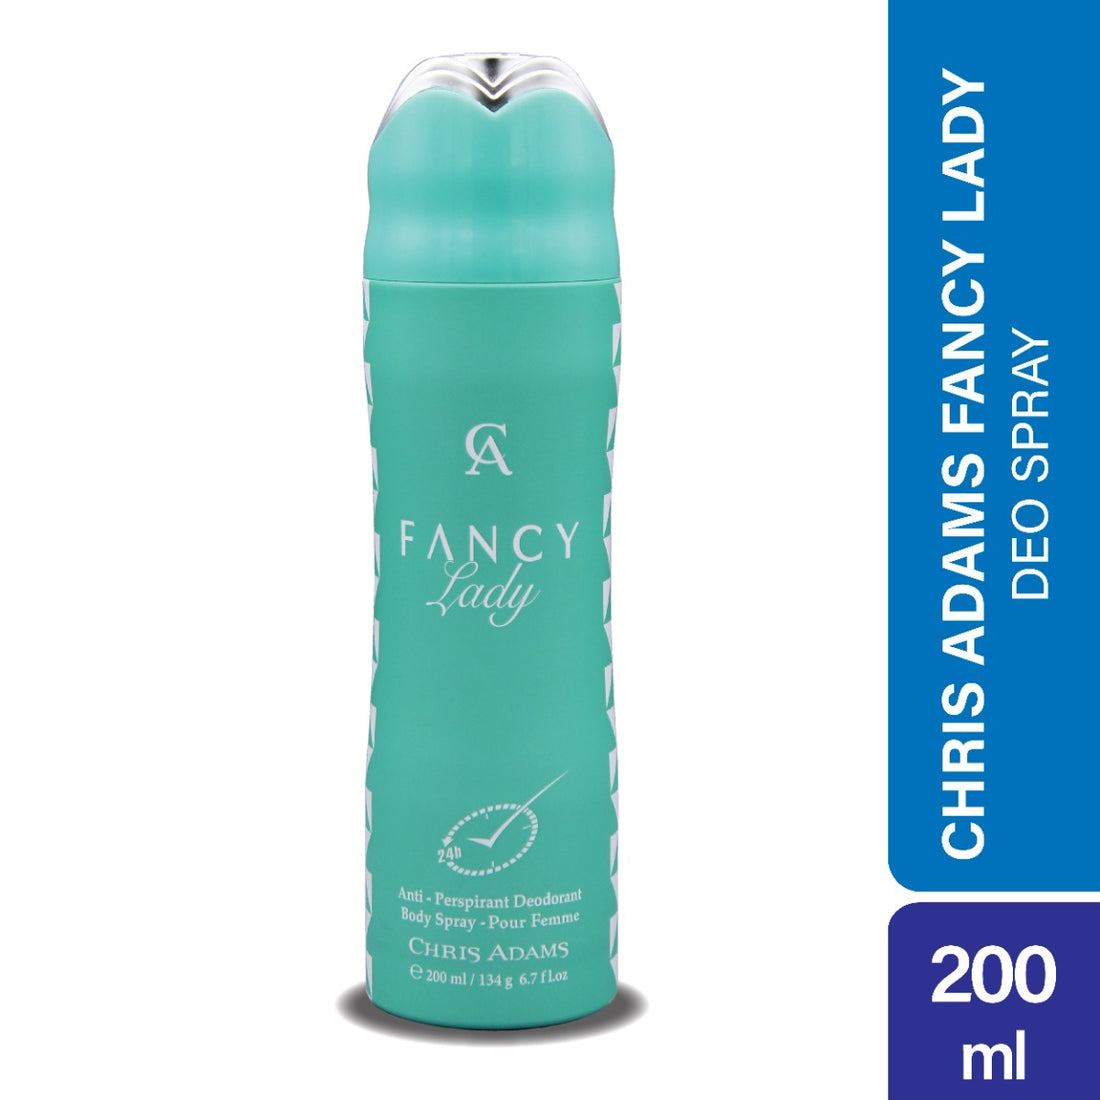 Chris Adams Deodorant Body Spray Fancy Lady (200ml)